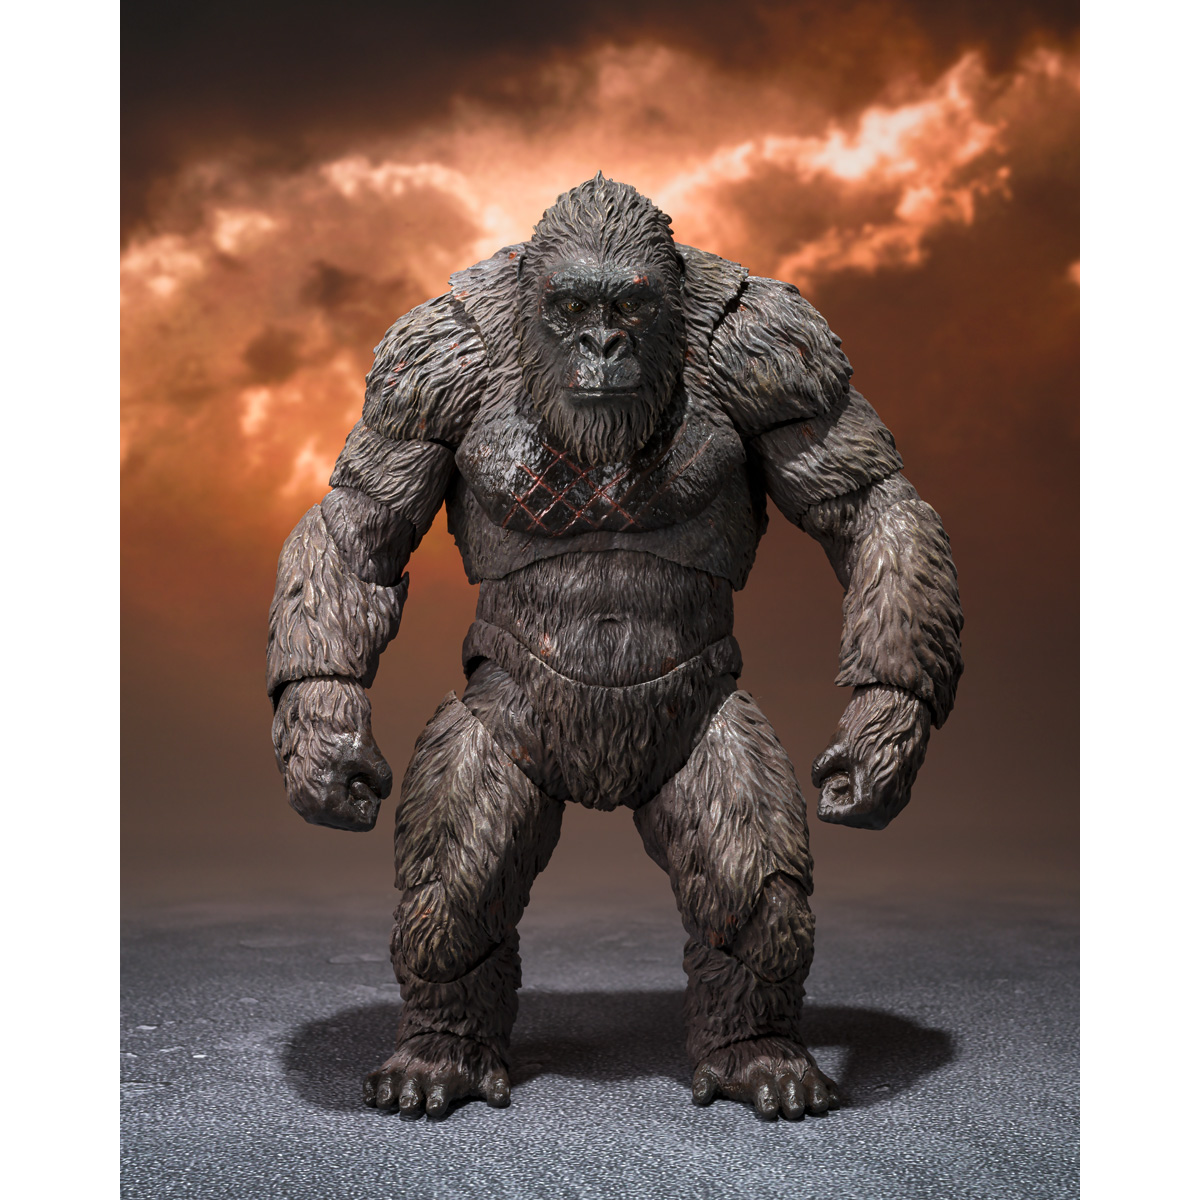 Details about   2021 Bandai PVC 28cm Godzilla Action Figure Godzilla vs Kong Toys Collectables 